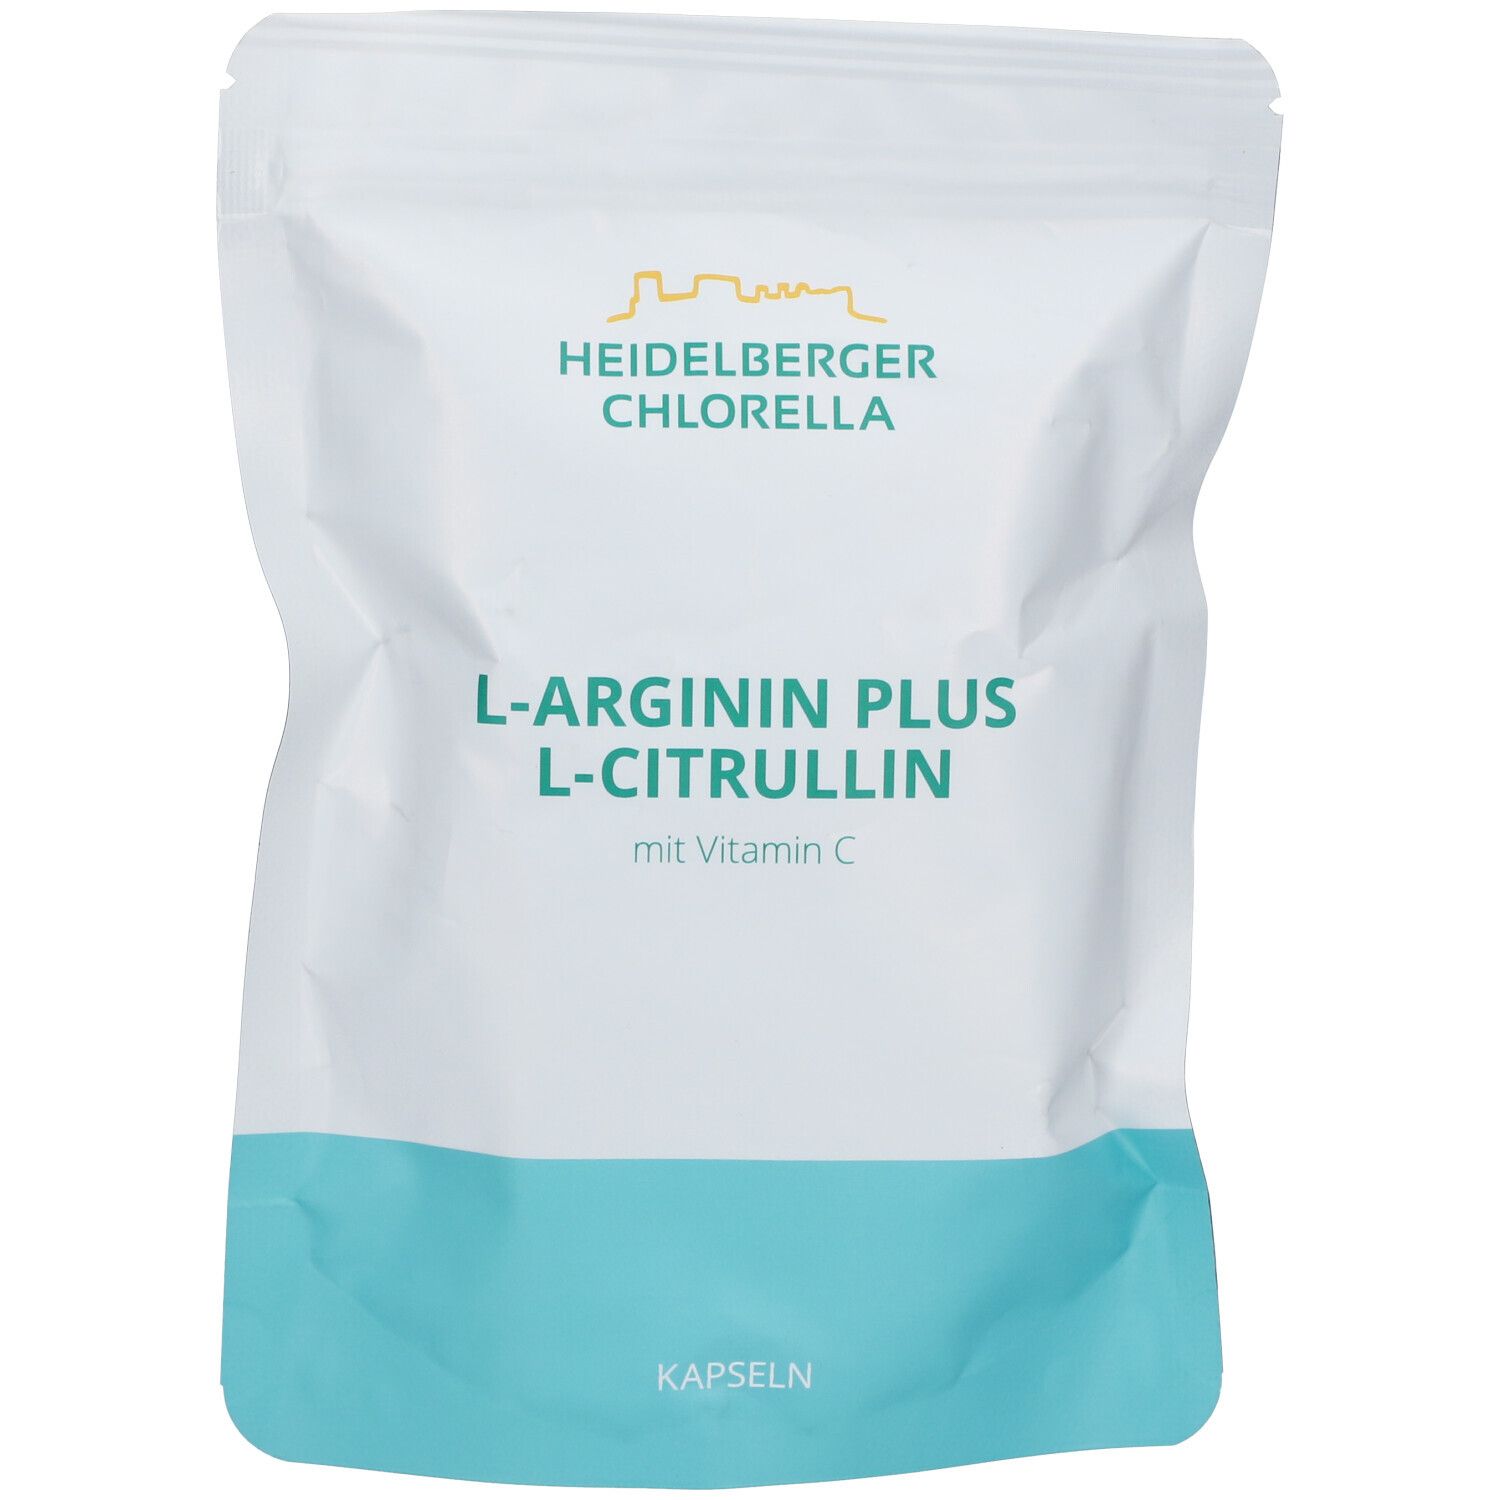 Heidelberger Chlorella® L-Arginin plus L-Citrullin mit Vitamin C